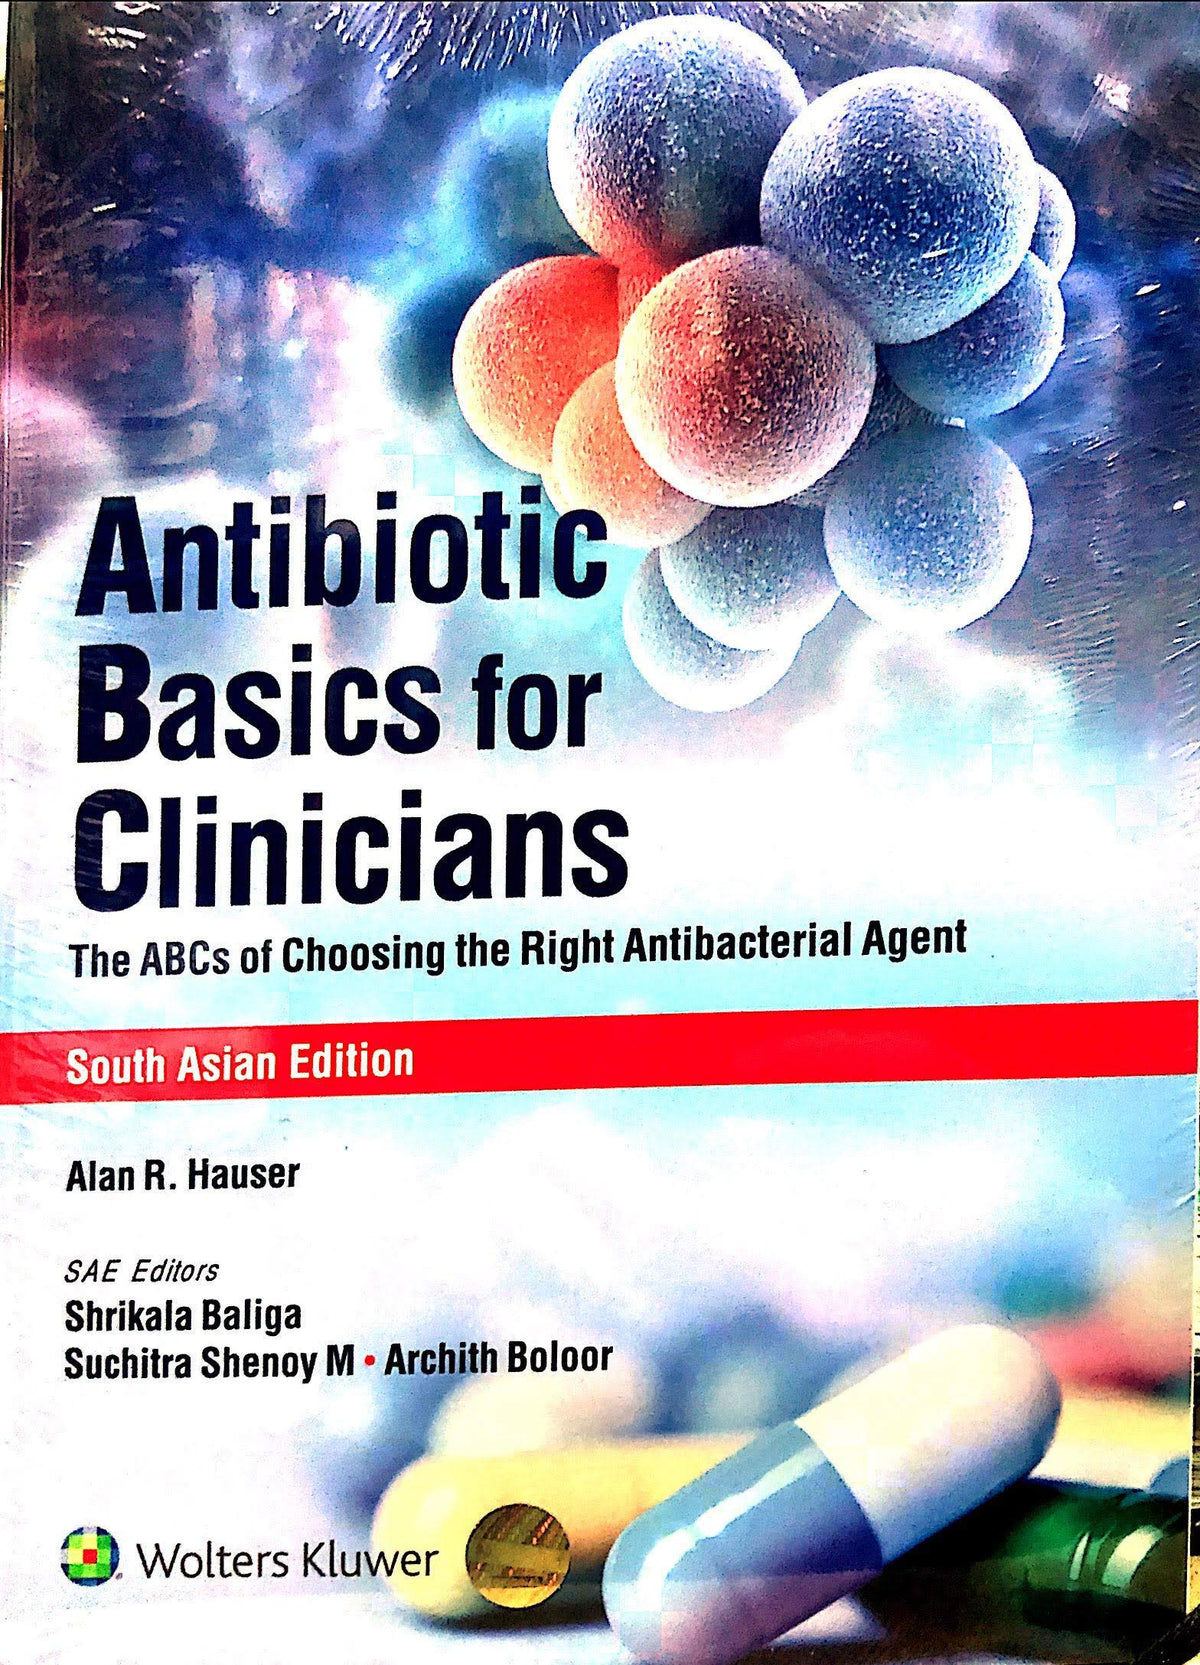 Antibiotic Basics for Clinicians South Asian Edition by Shrikala Baliga